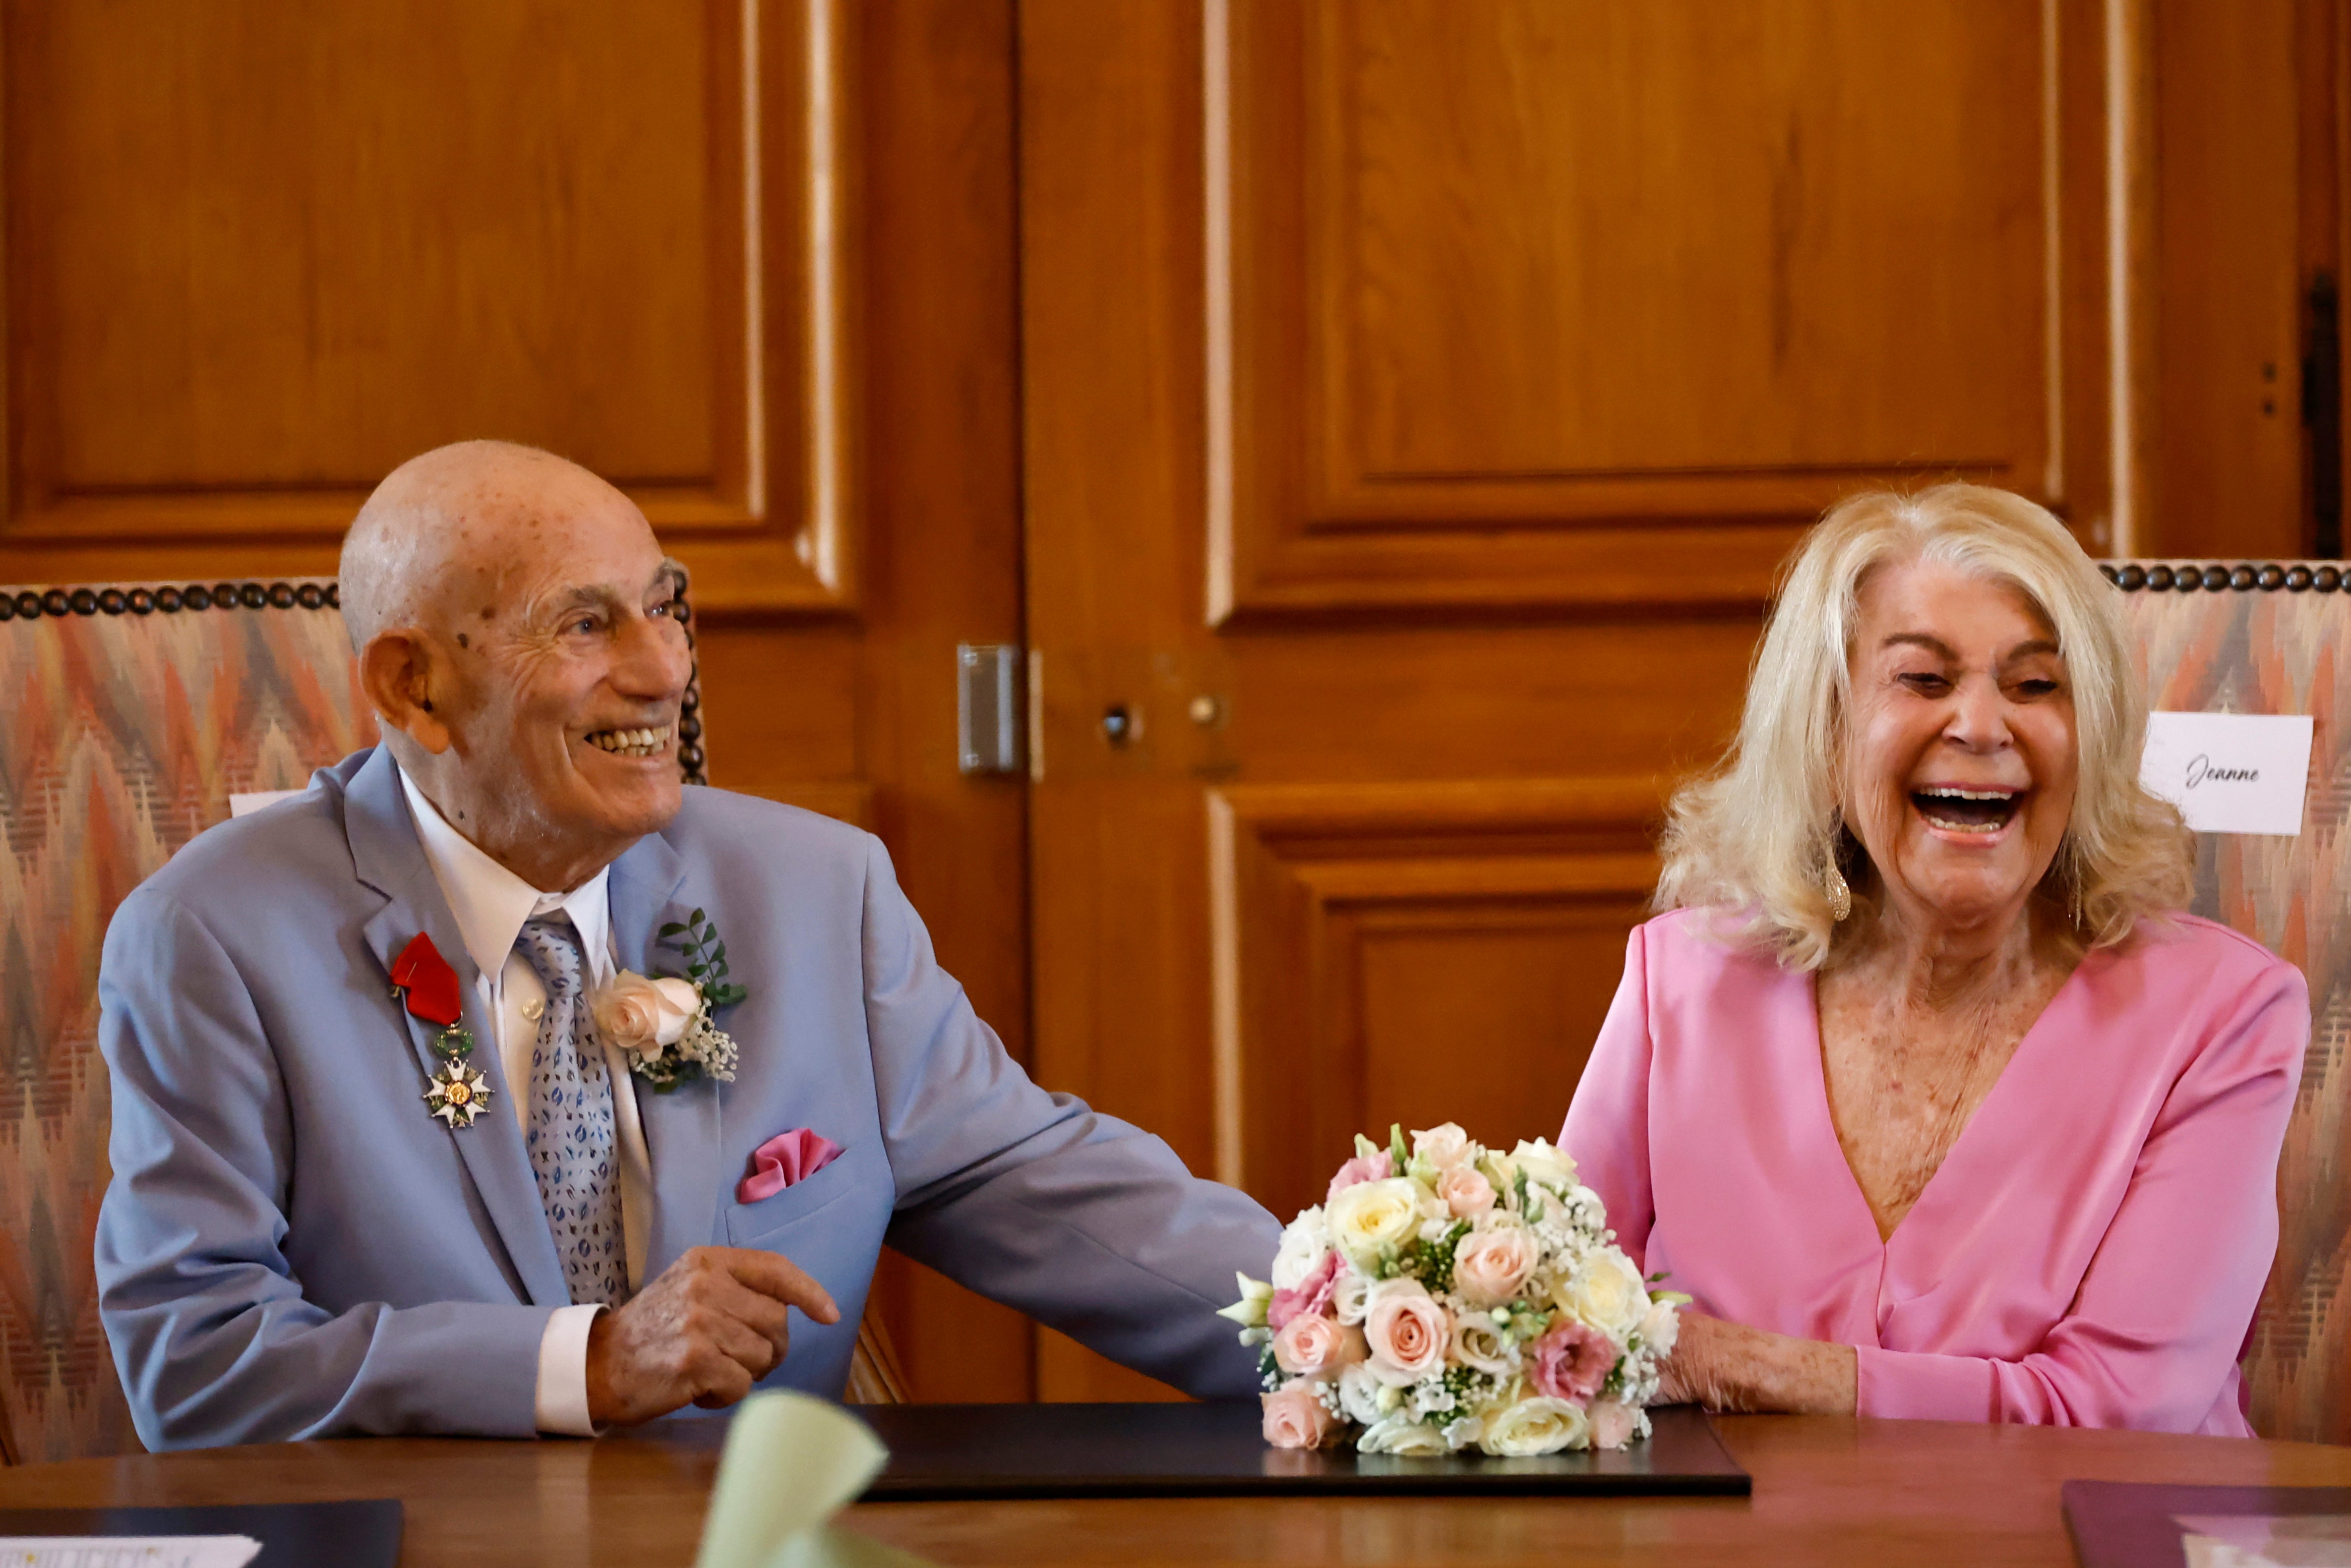 World War II veteran Harold Terens, 100, marries Jeanne Swerlin, 96, on 80th anniversary of D-Day